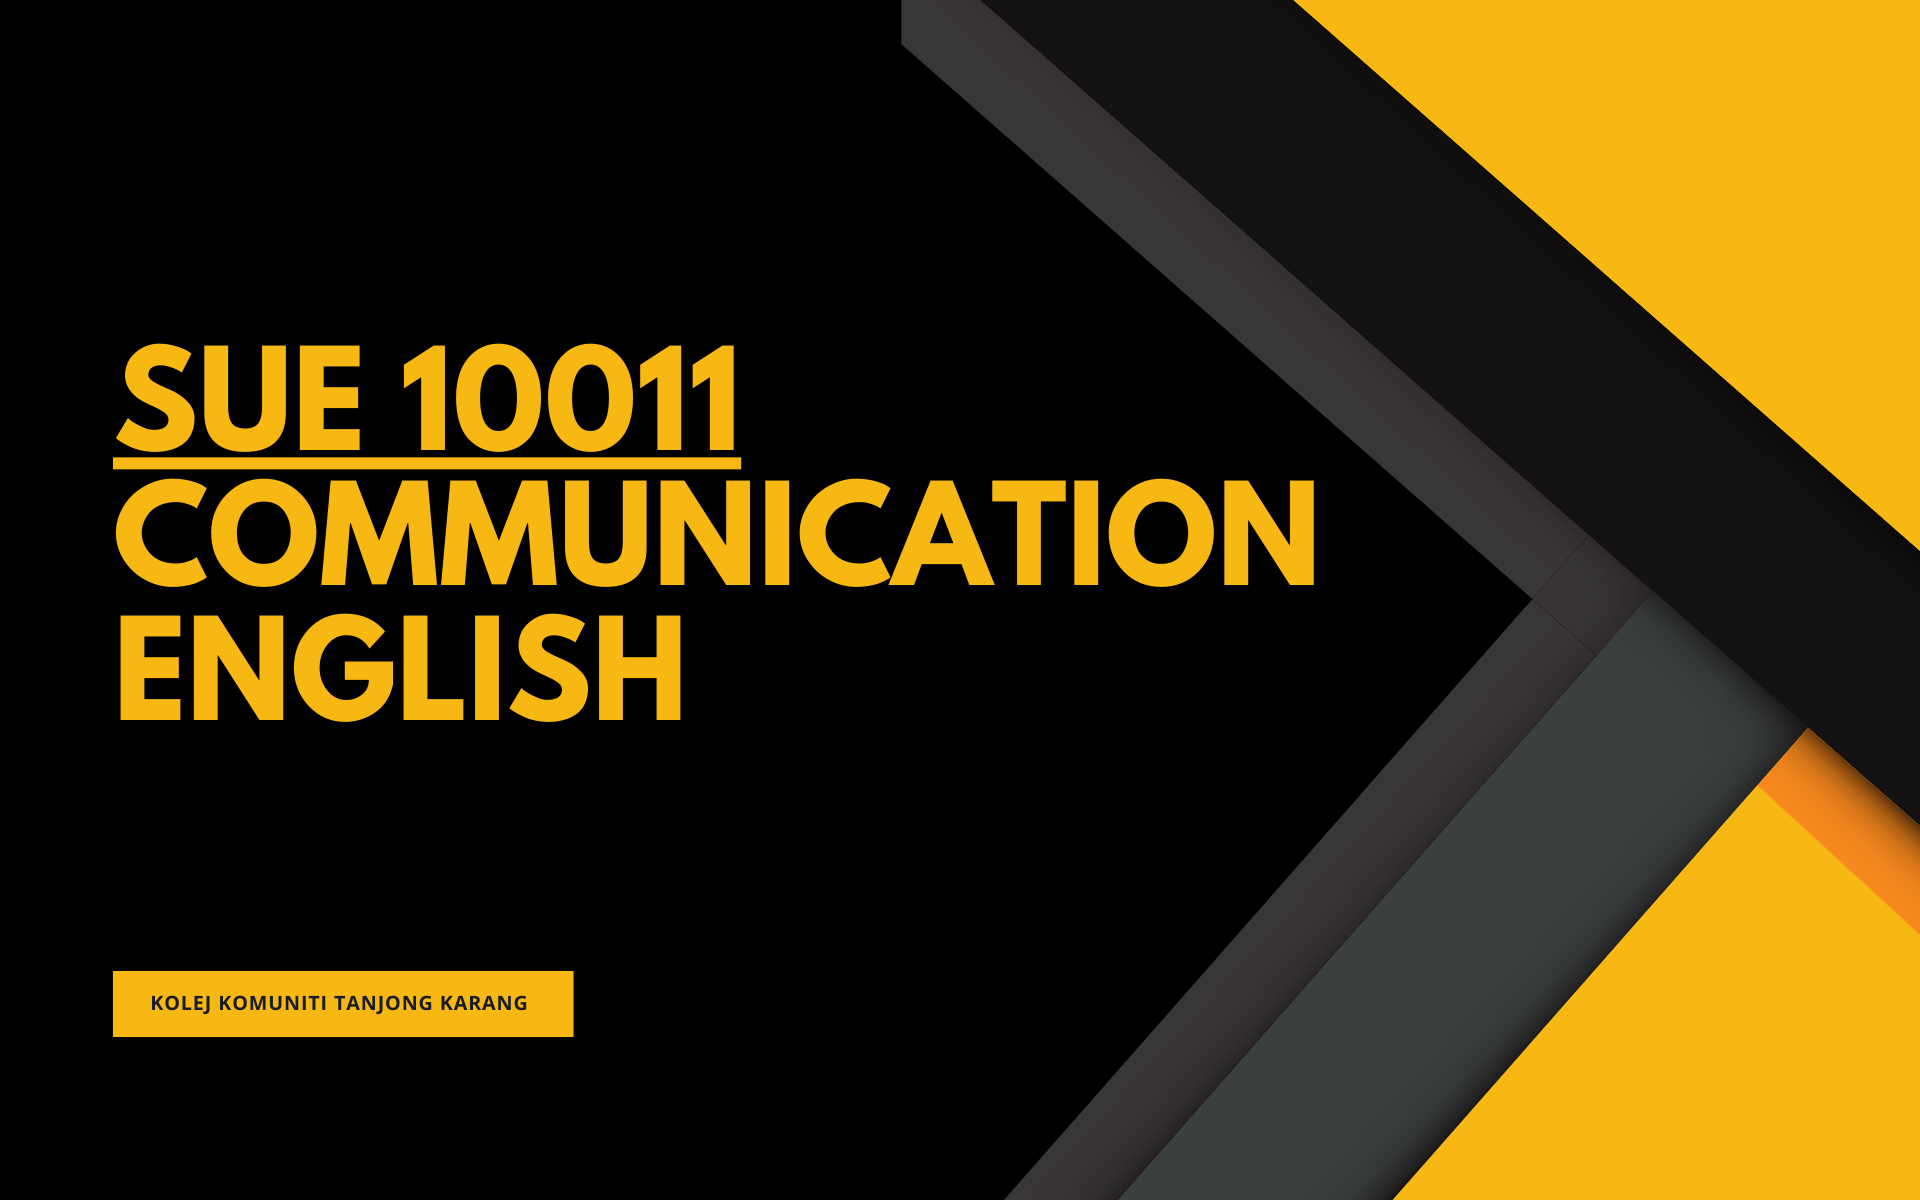 SUE 10011 COMMUNICATION ENGLISH